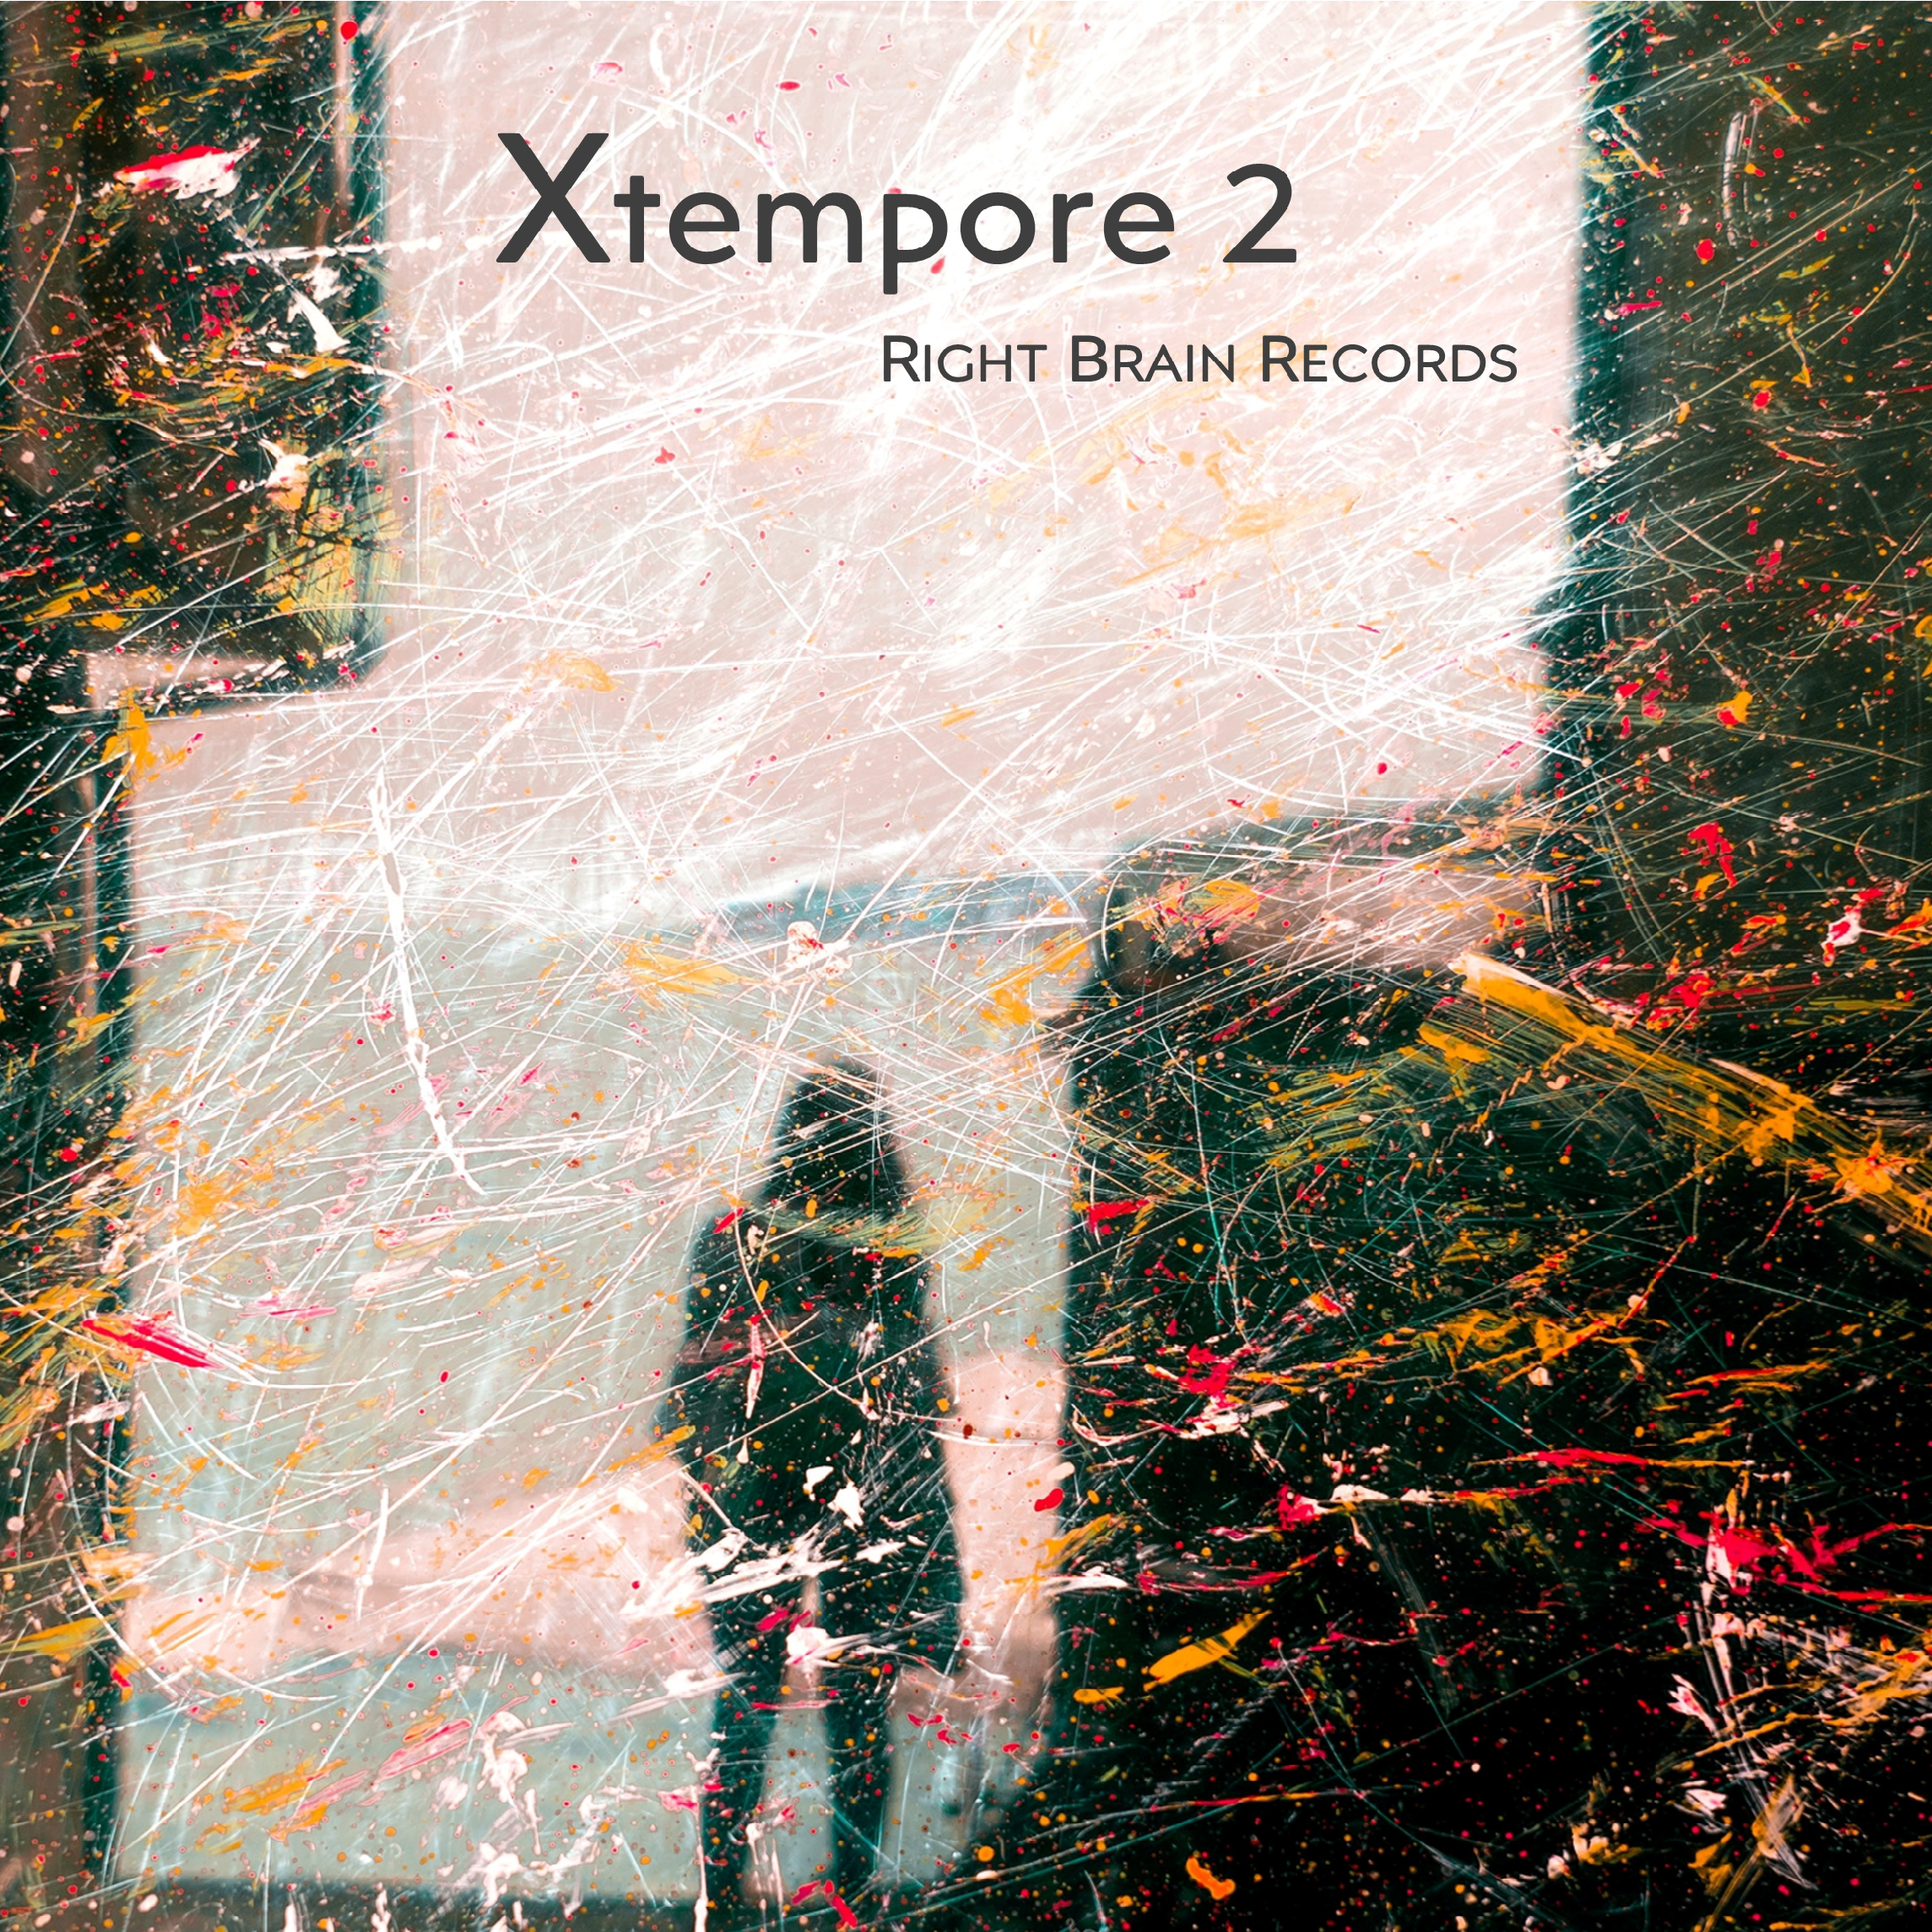 RBR Compilation: Xtempore 2